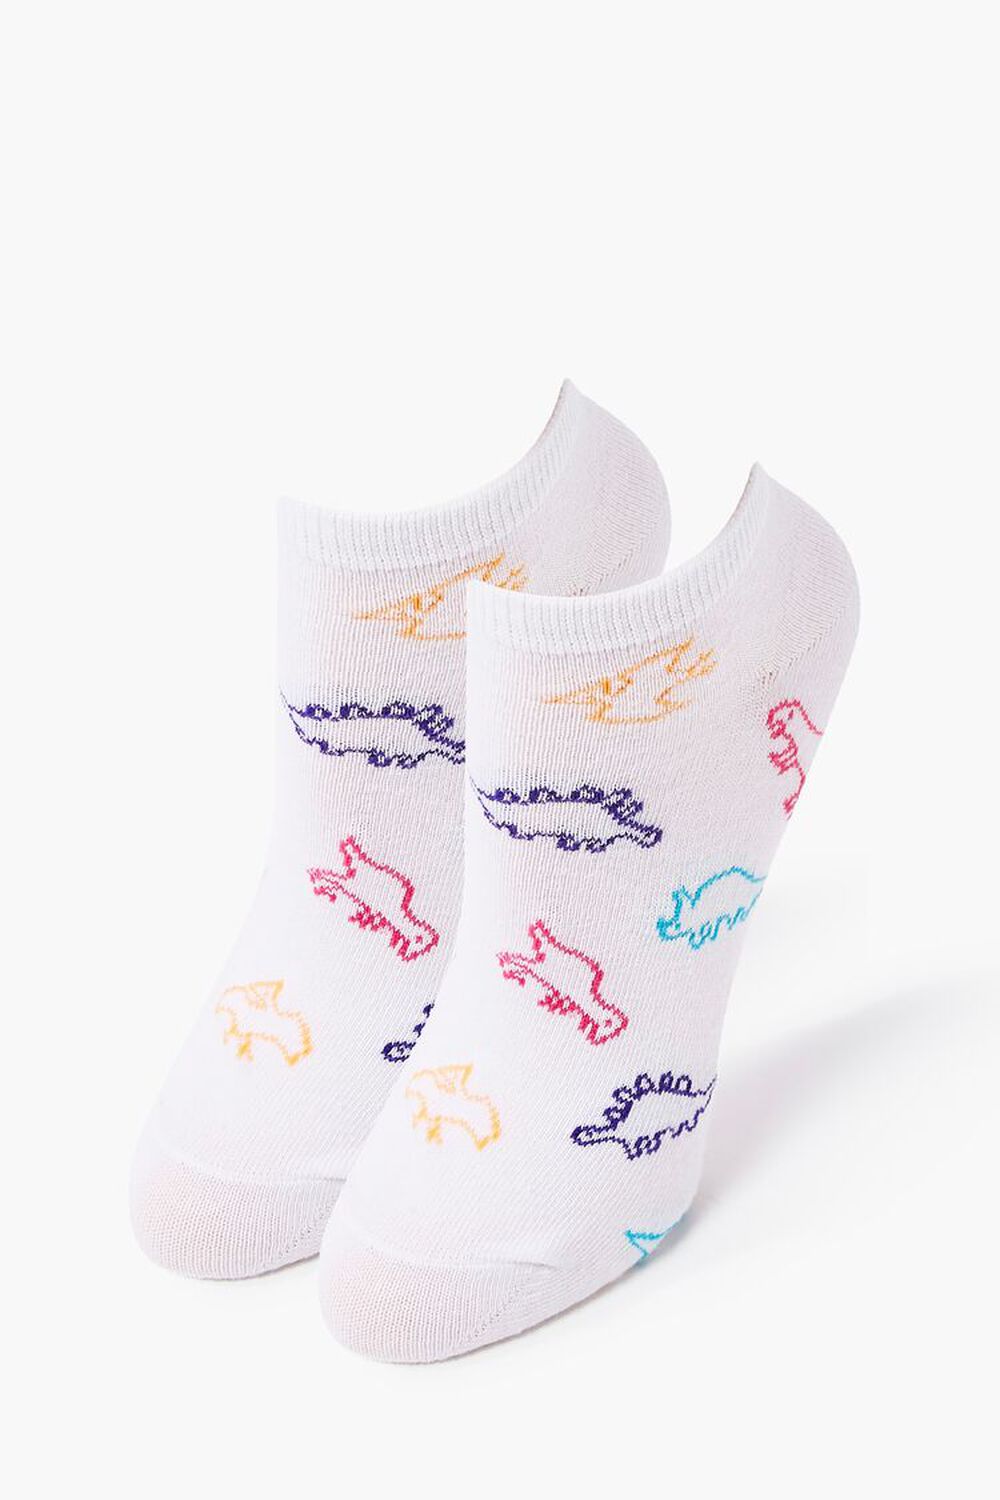 Dinosaur Print Ankle Socks, image 1